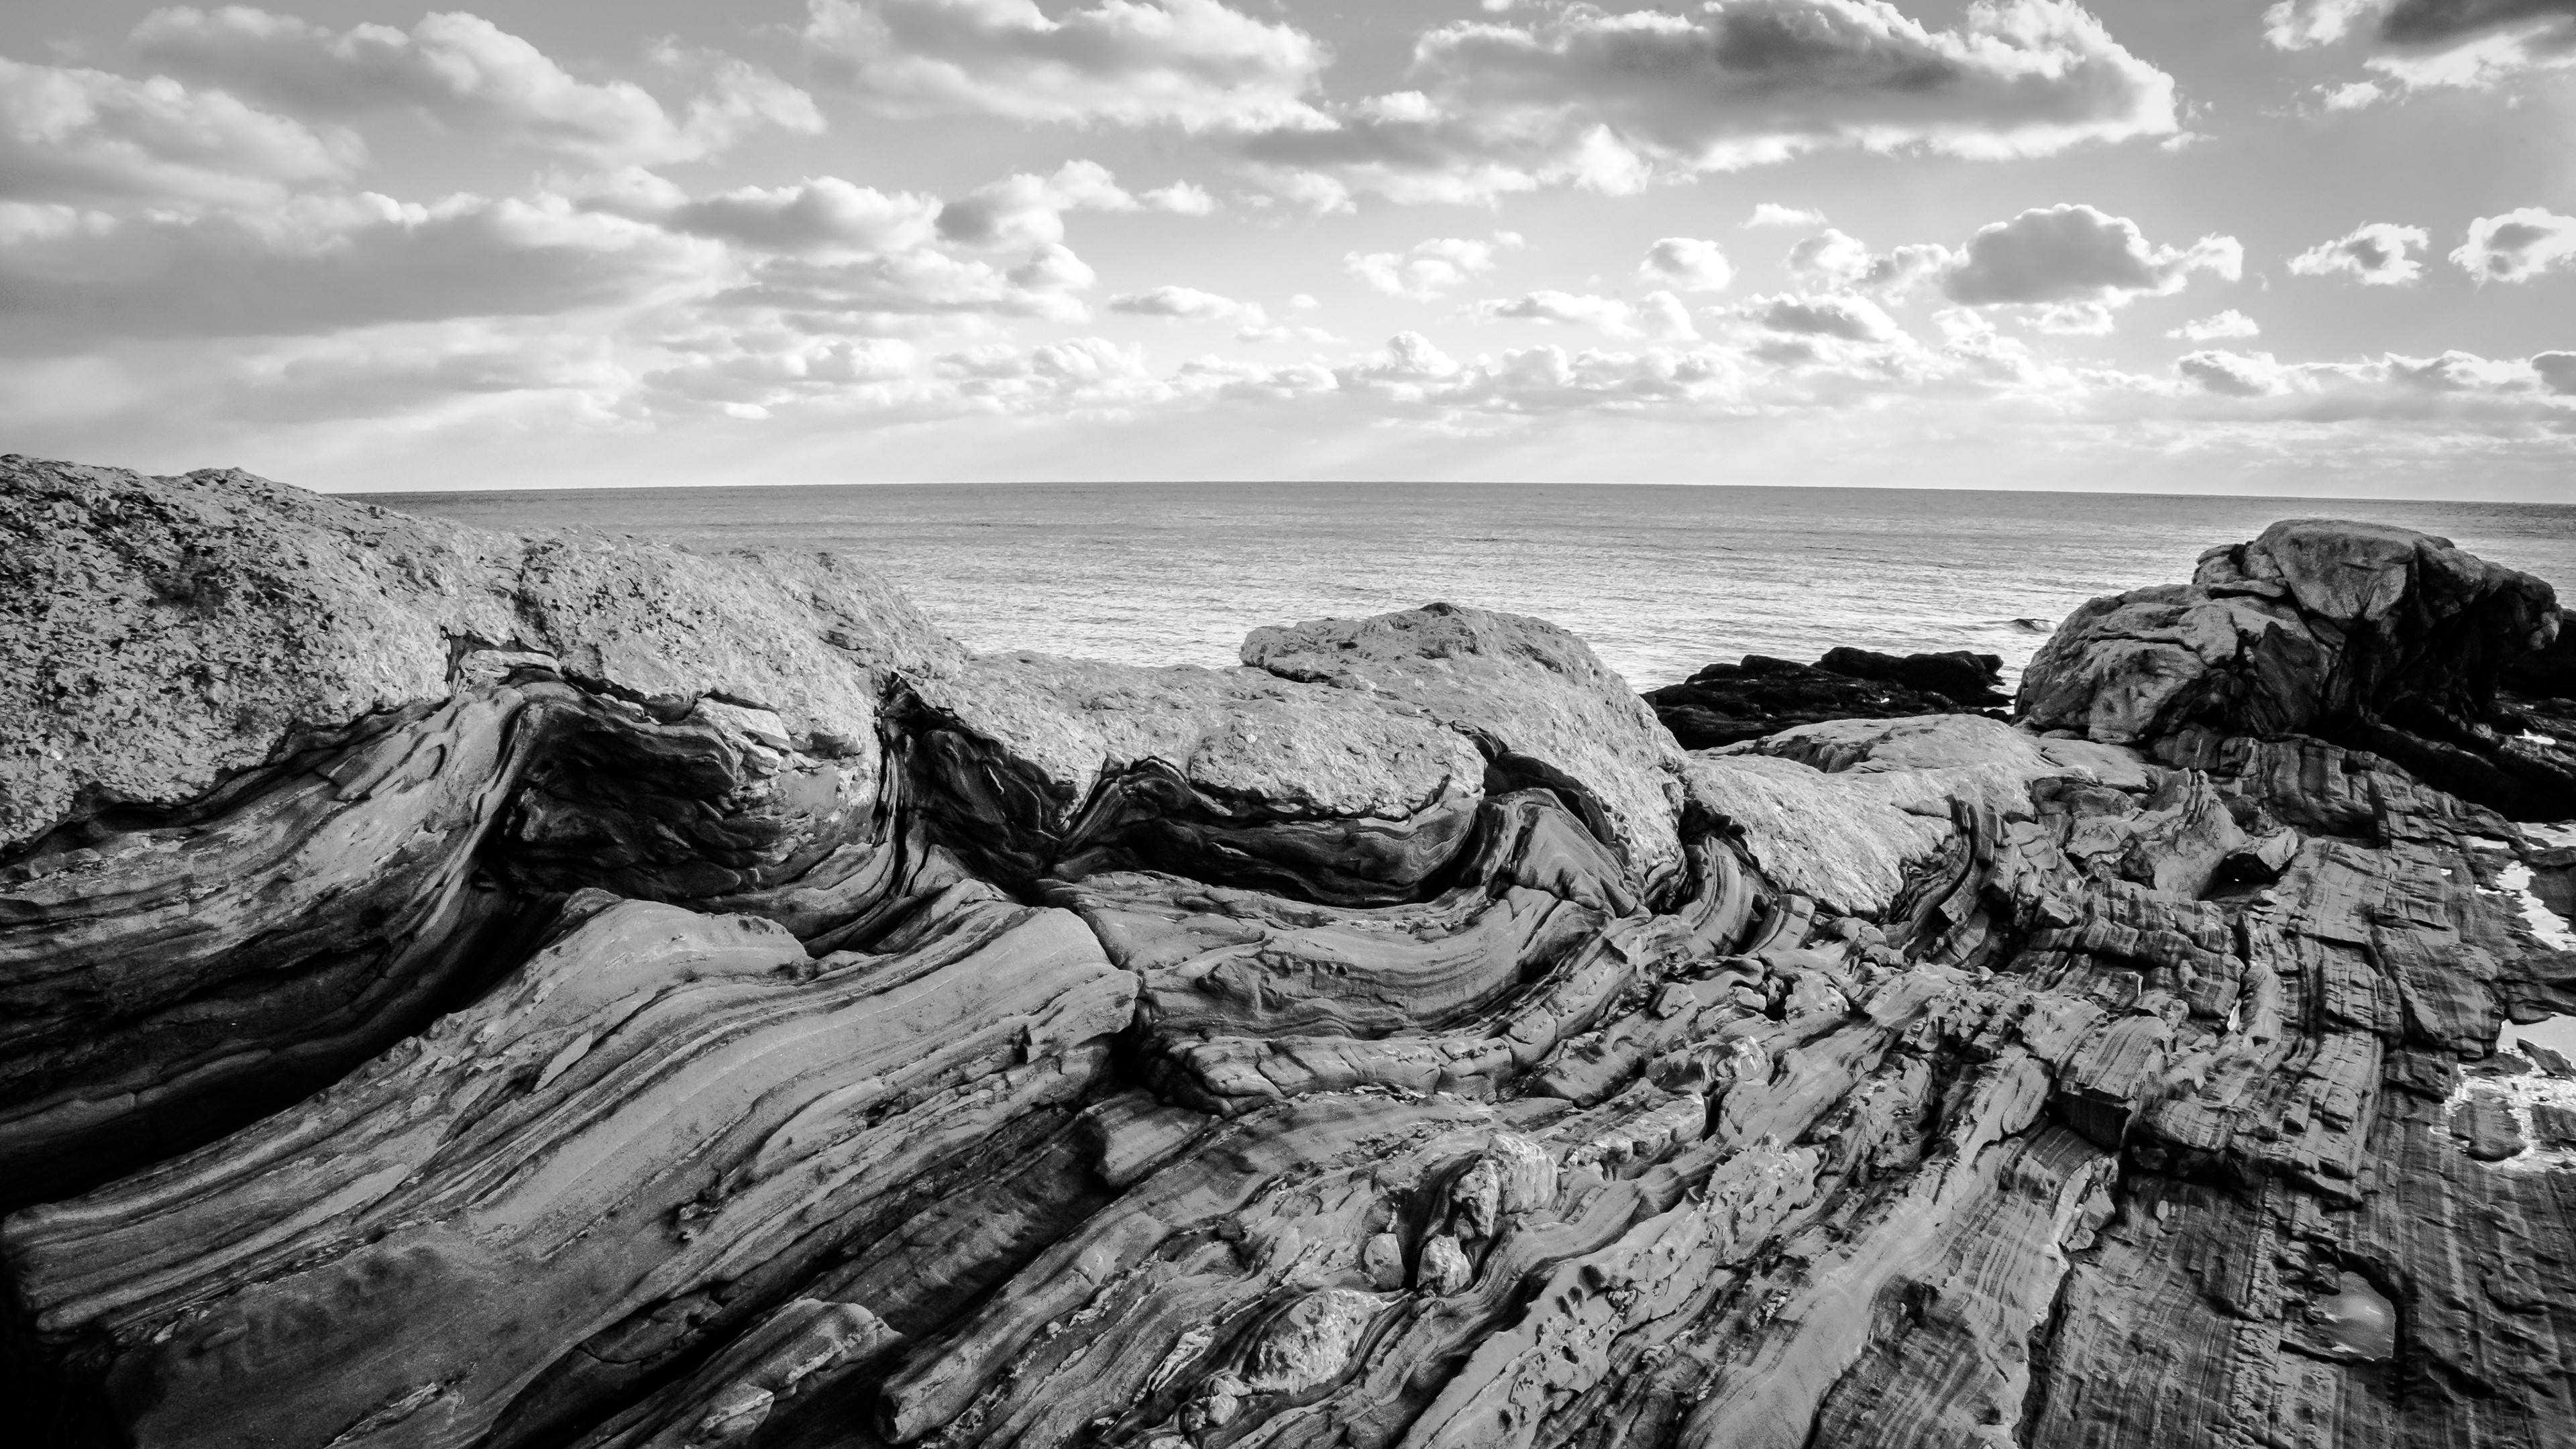 General 3840x2160 landscape Maine monochrome USA coast nature sea rocks clouds